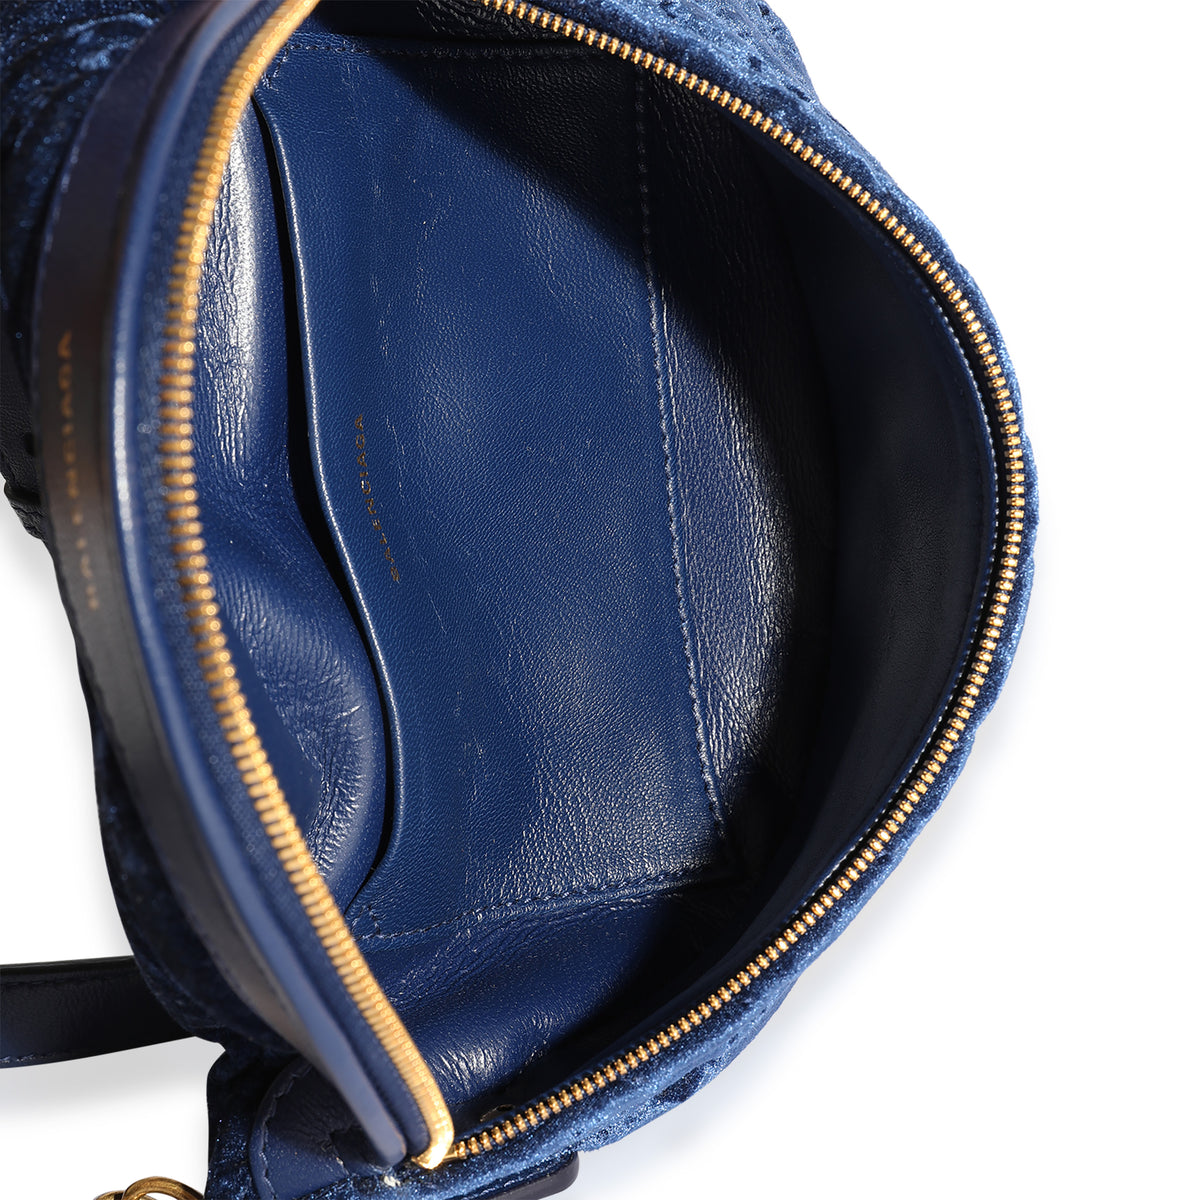 Balenciaga Blue Velvet Quilted Souvenir Belt Bag